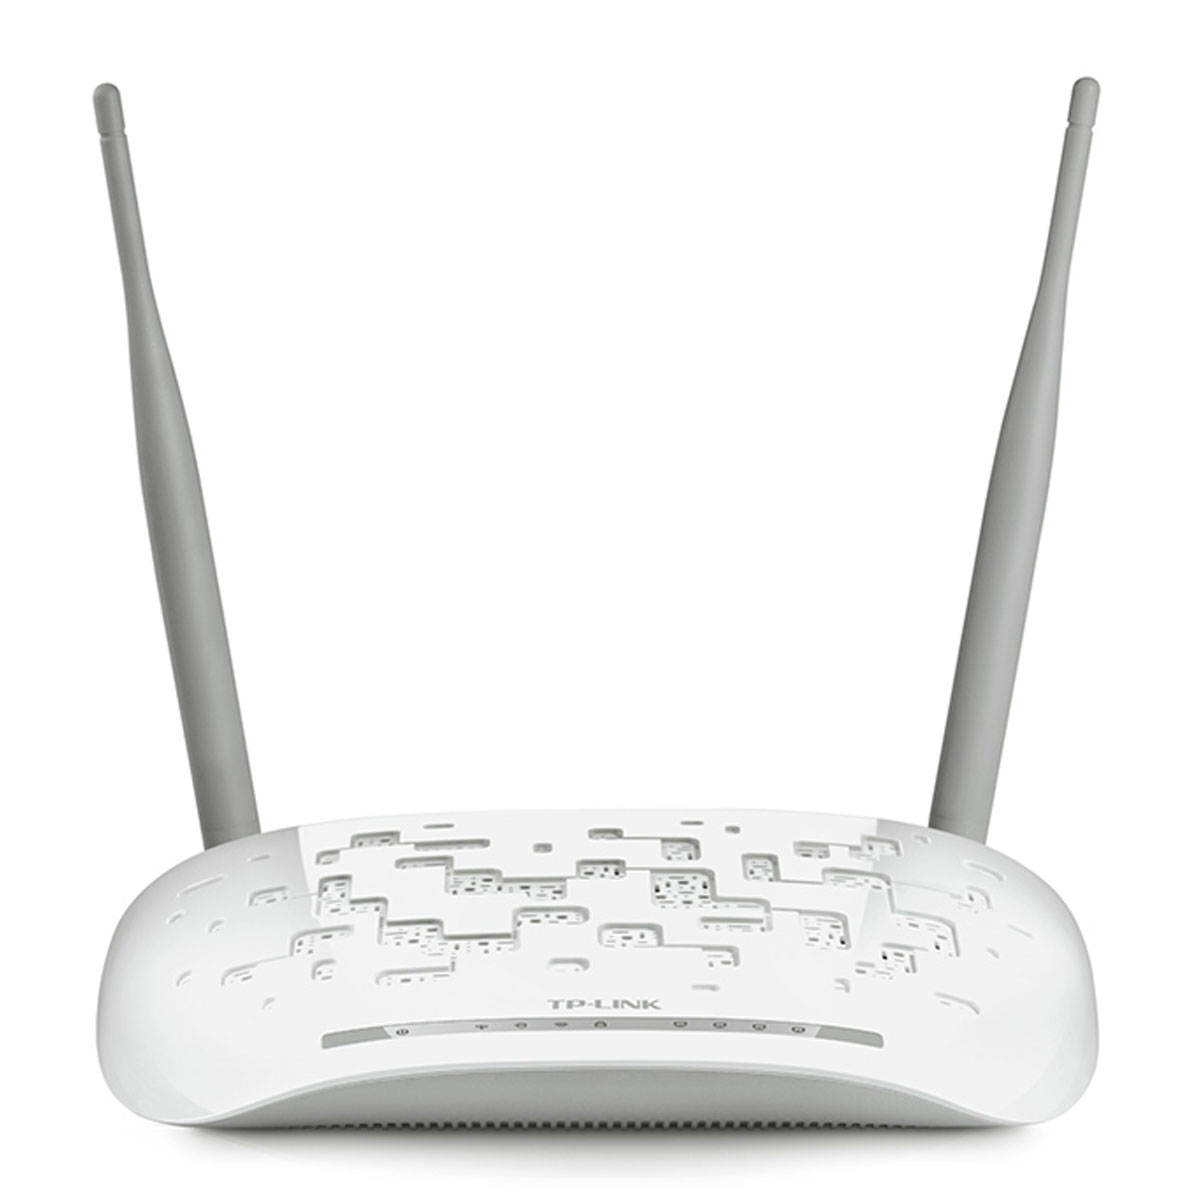 Wi-Fi роутер TP-LINK TD-W8961NB, серии NB, 802.11b/g/n, 300 Mb/s, цвет белый